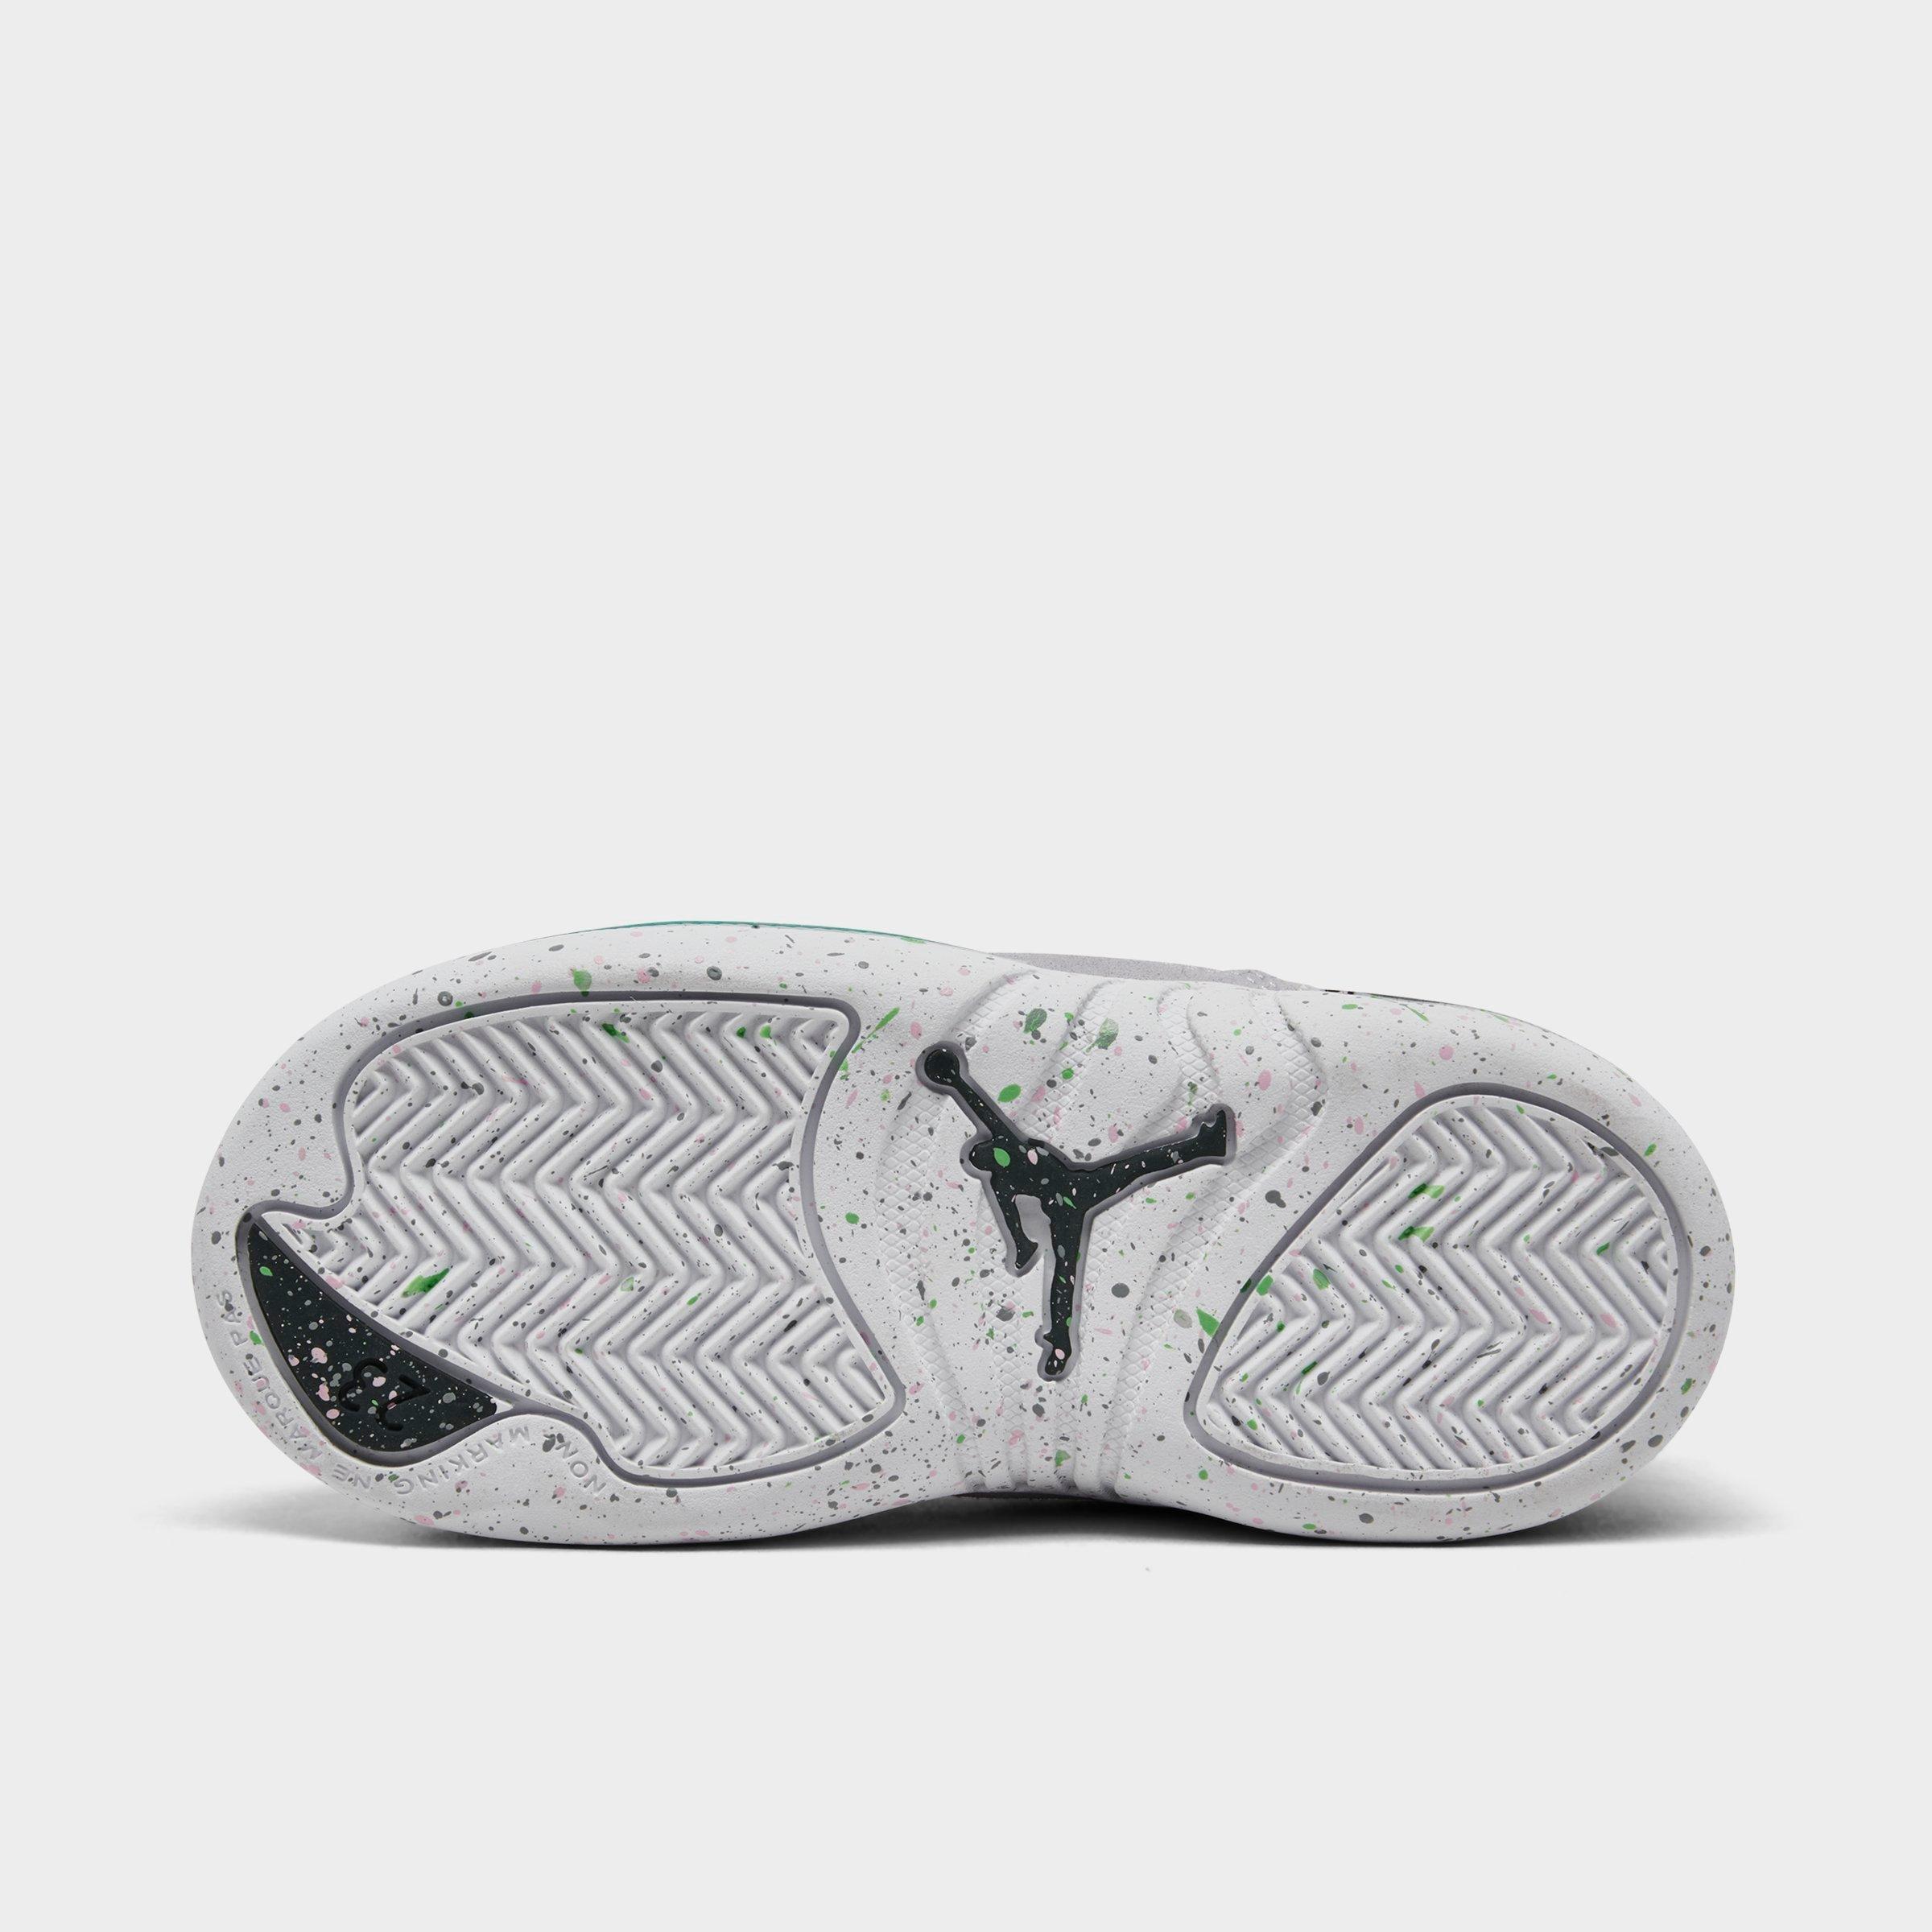 Air Jordan Retro 12 Basketball Shoes